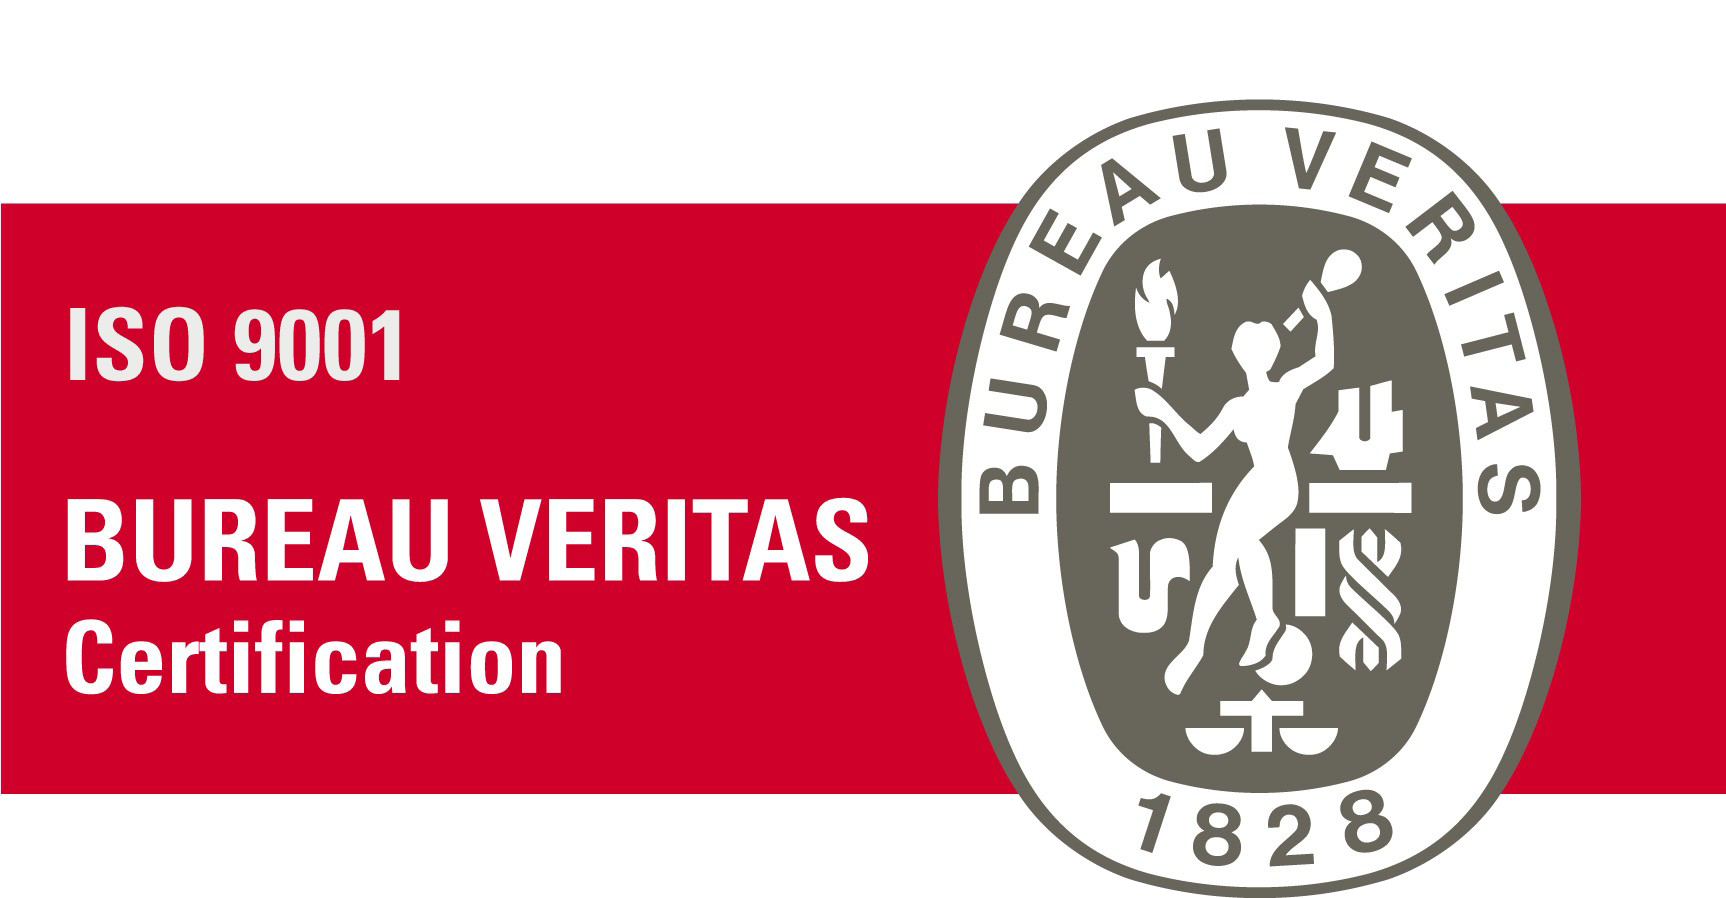 Bureau Vertias ISO9001 Certification Logo